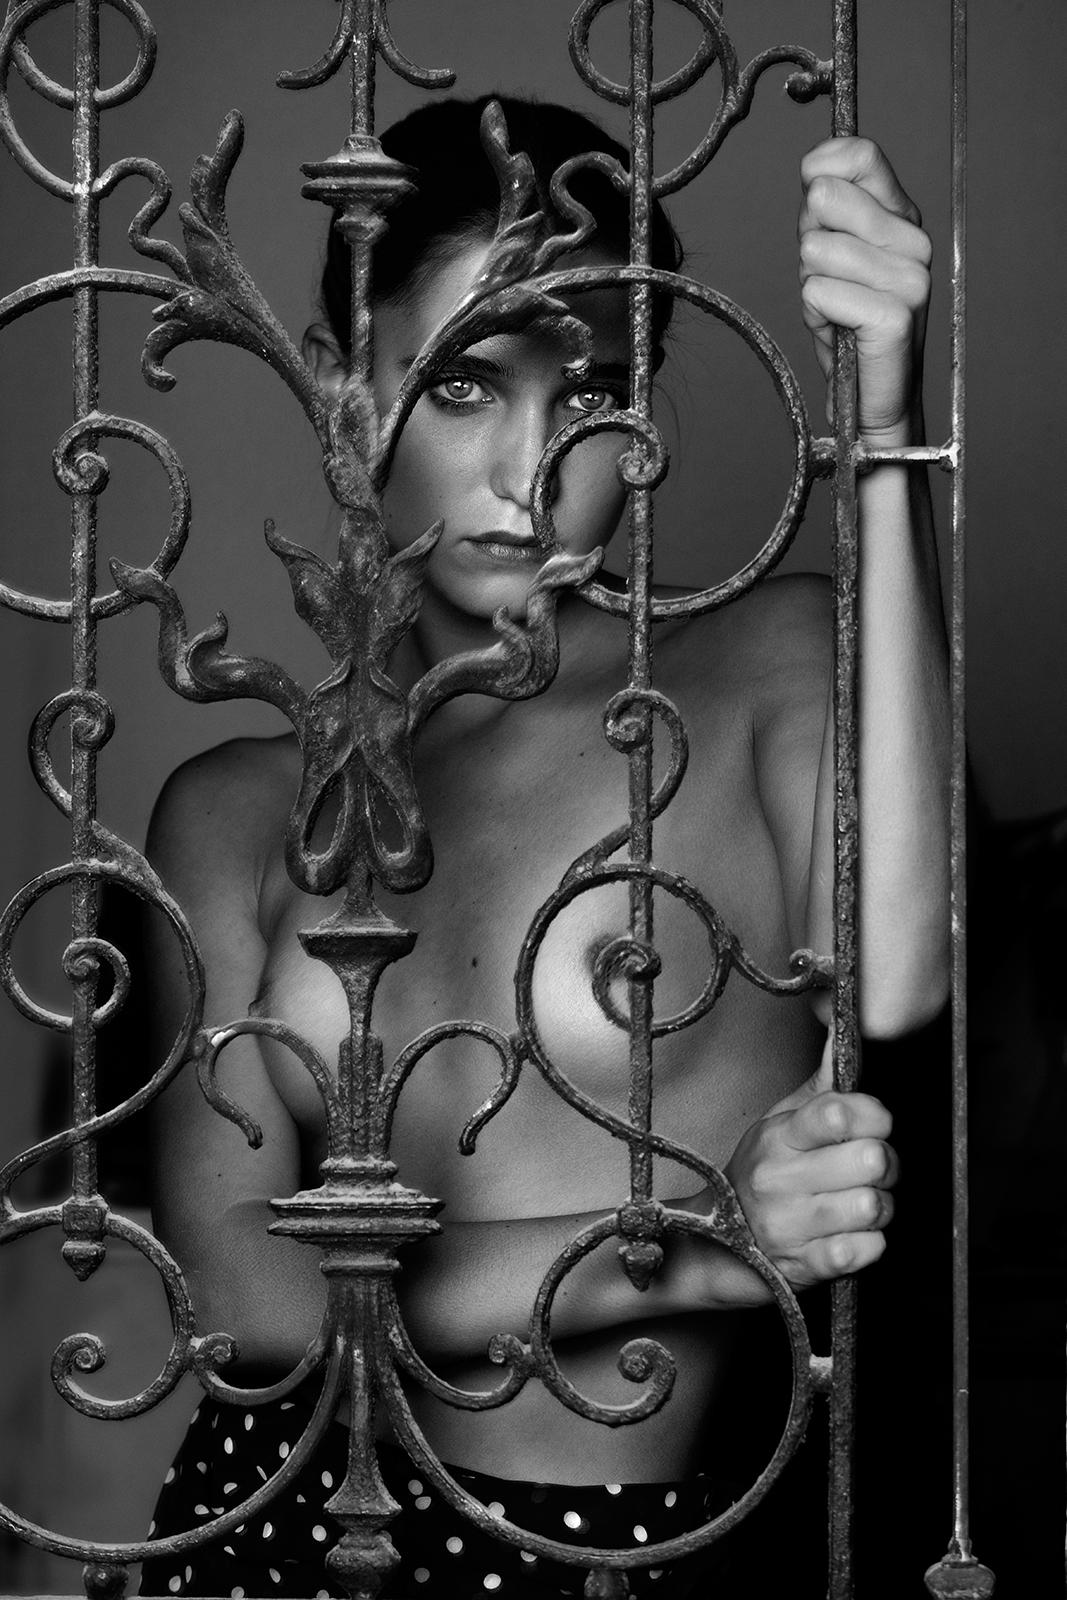 Nude Photograph Ian Sanderson - Impression d'art nue en édition limitée signée, Woman Model, Intimate - Caroline